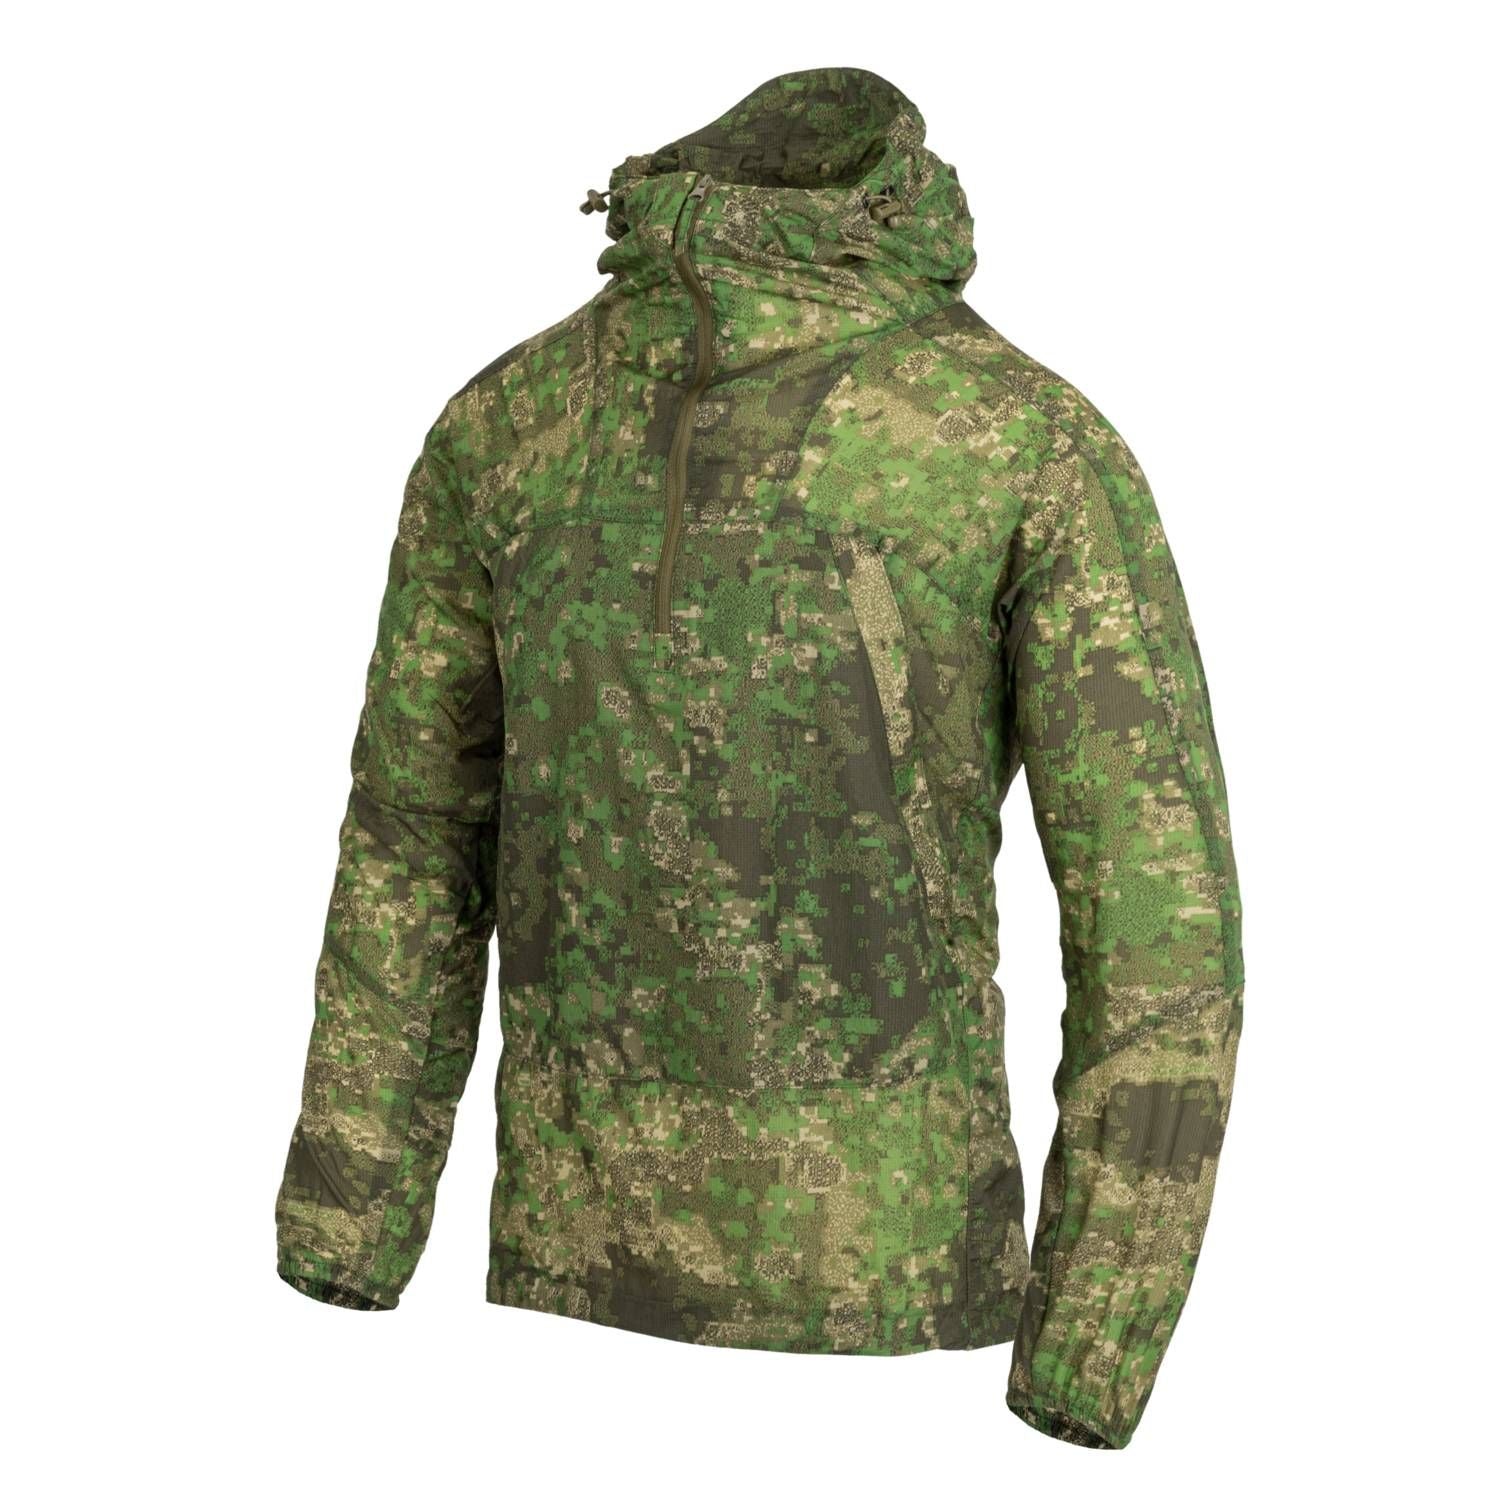 Outdoor Jackets, Waterproof, Military Coats & Jackets – The Back 